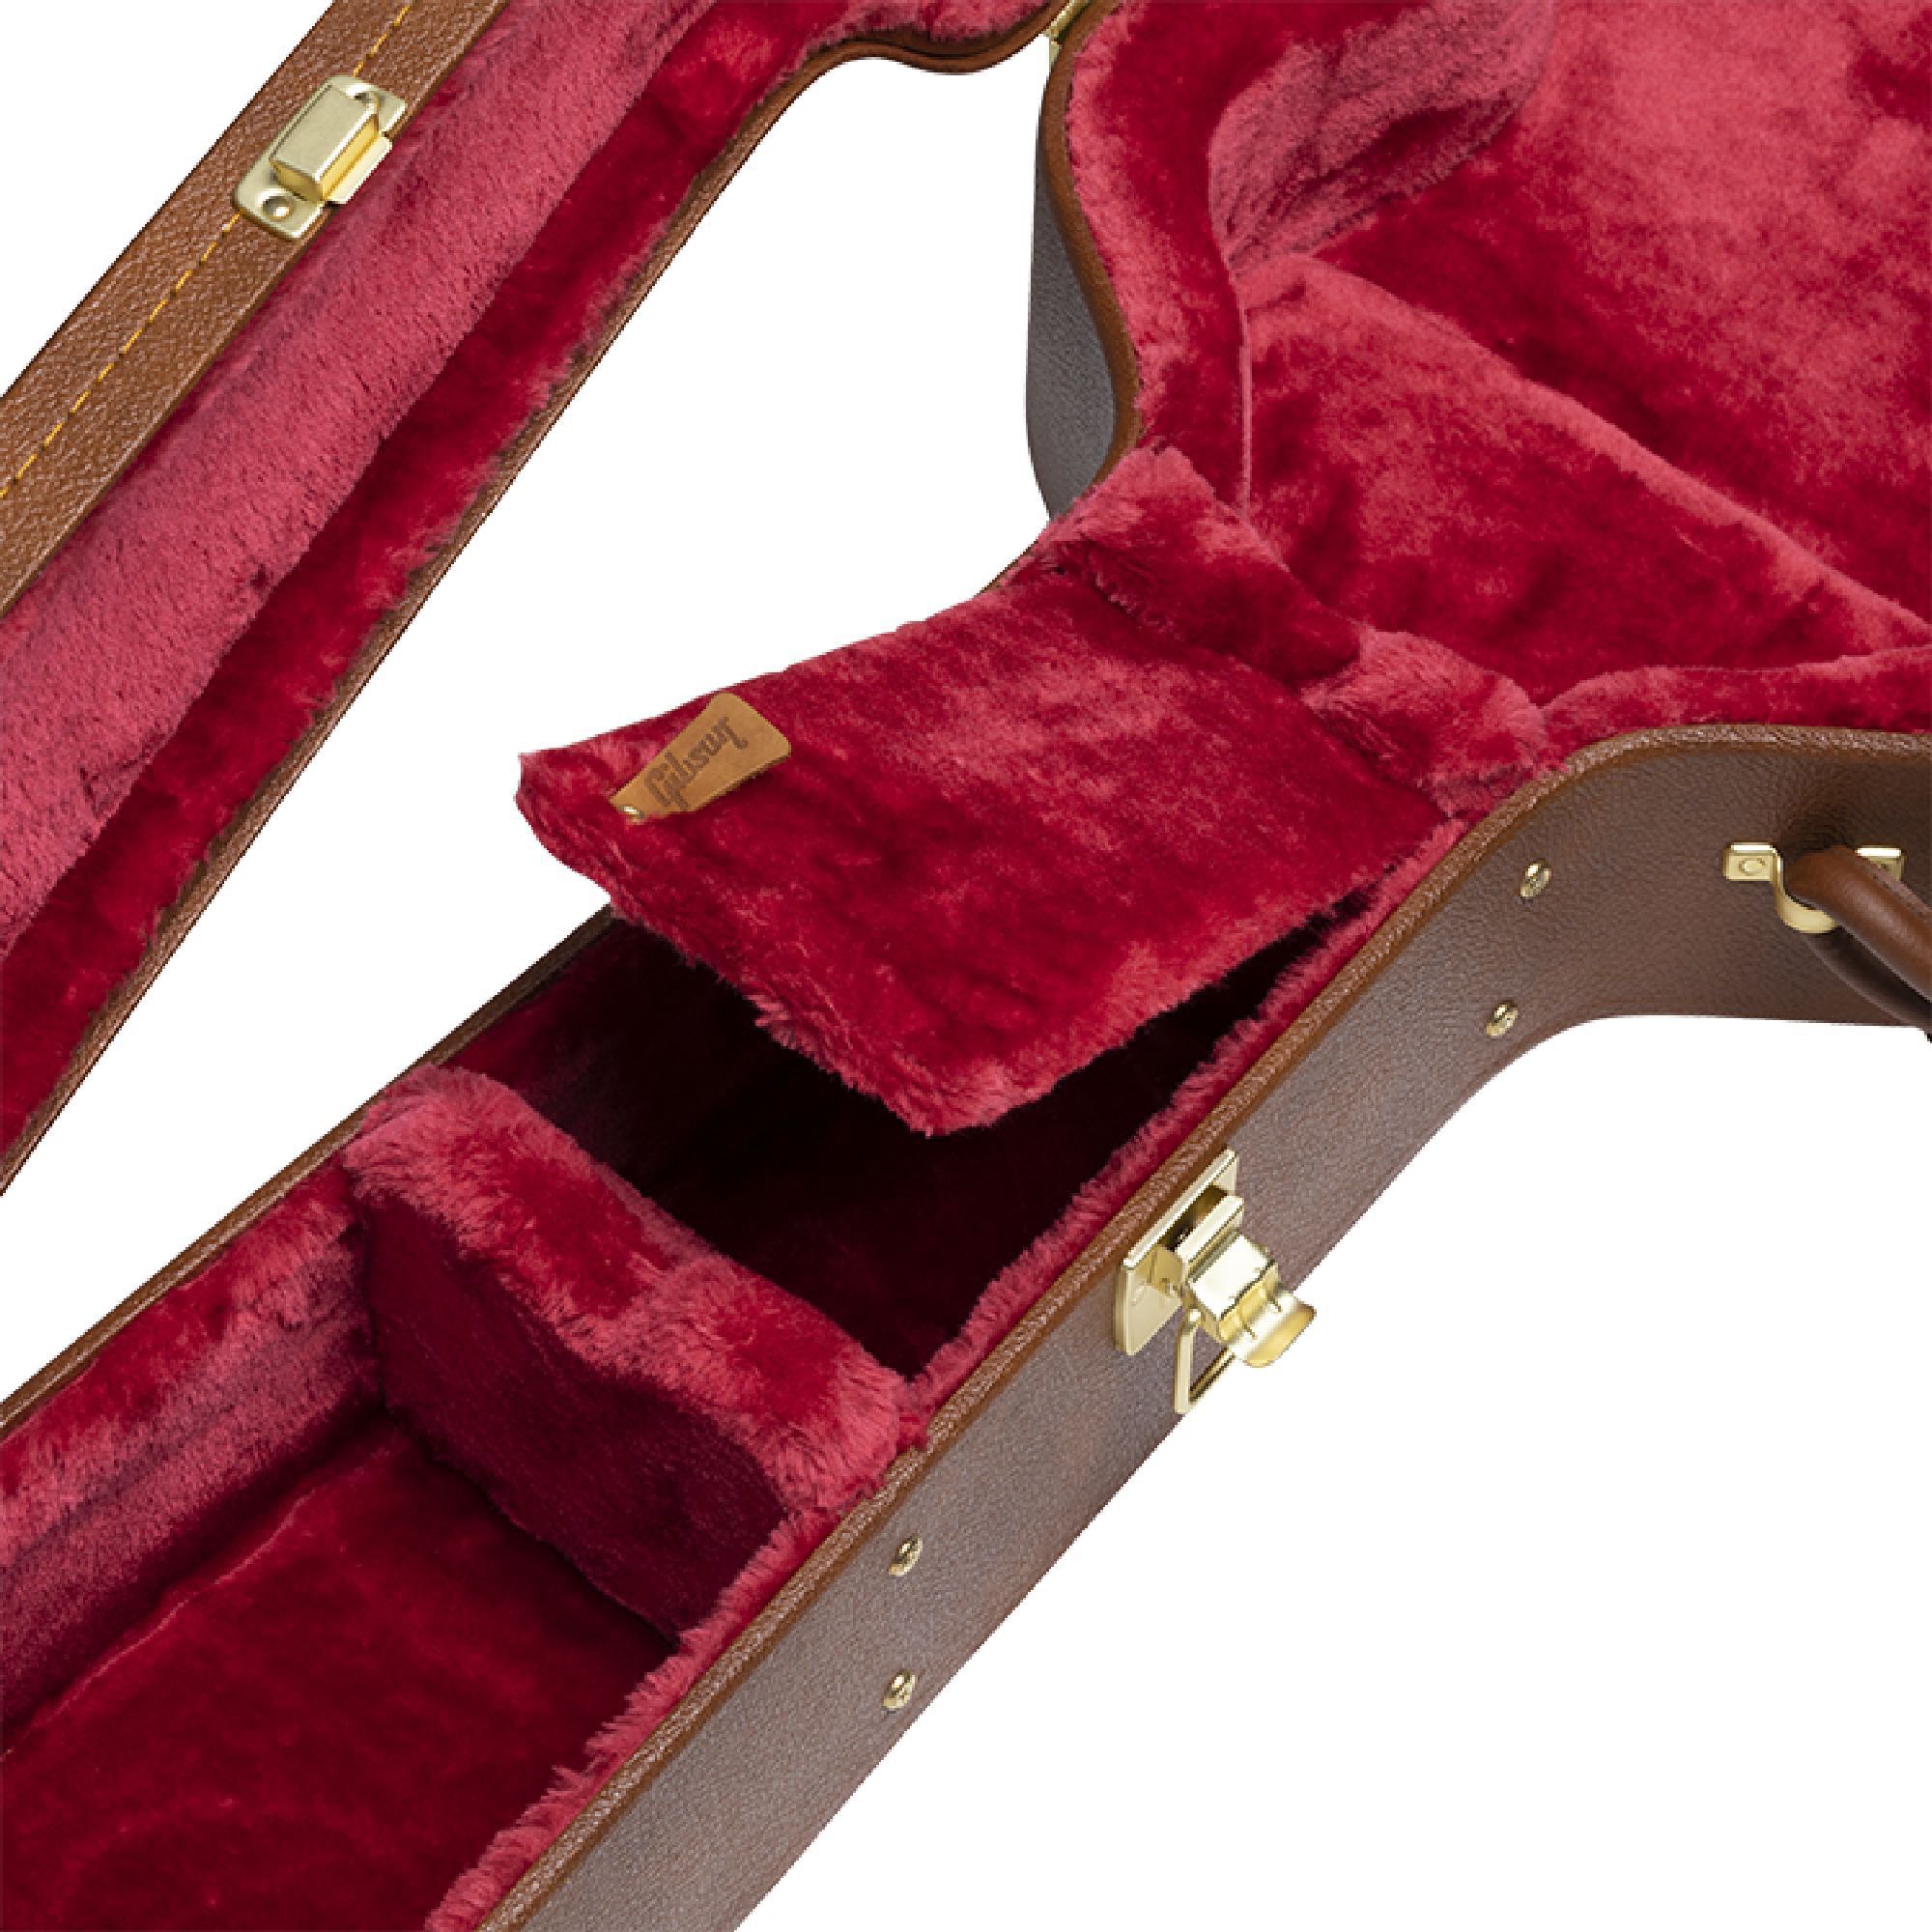 Gibson Small-Body Acoustic Original Hardshell Case Brown Чехлы и кейсы для акустических гитар